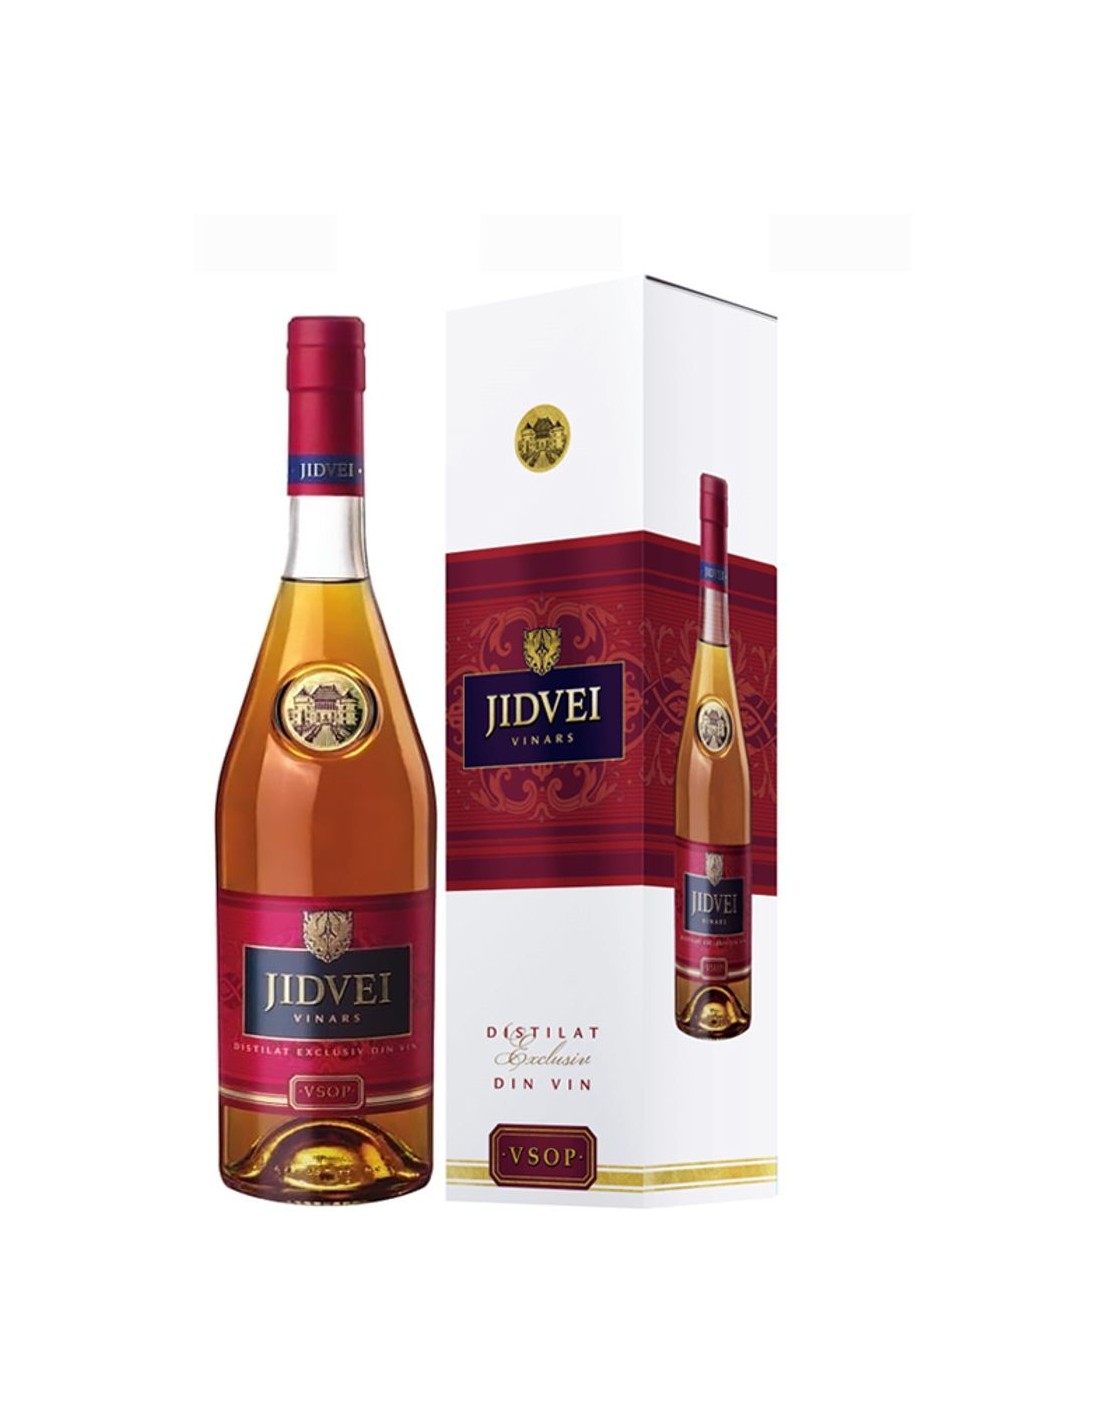 Brandy Jidvei Vinars Tarnave VSOP + cutie 42% alc., 0.7L, Romania alcooldiscount.ro